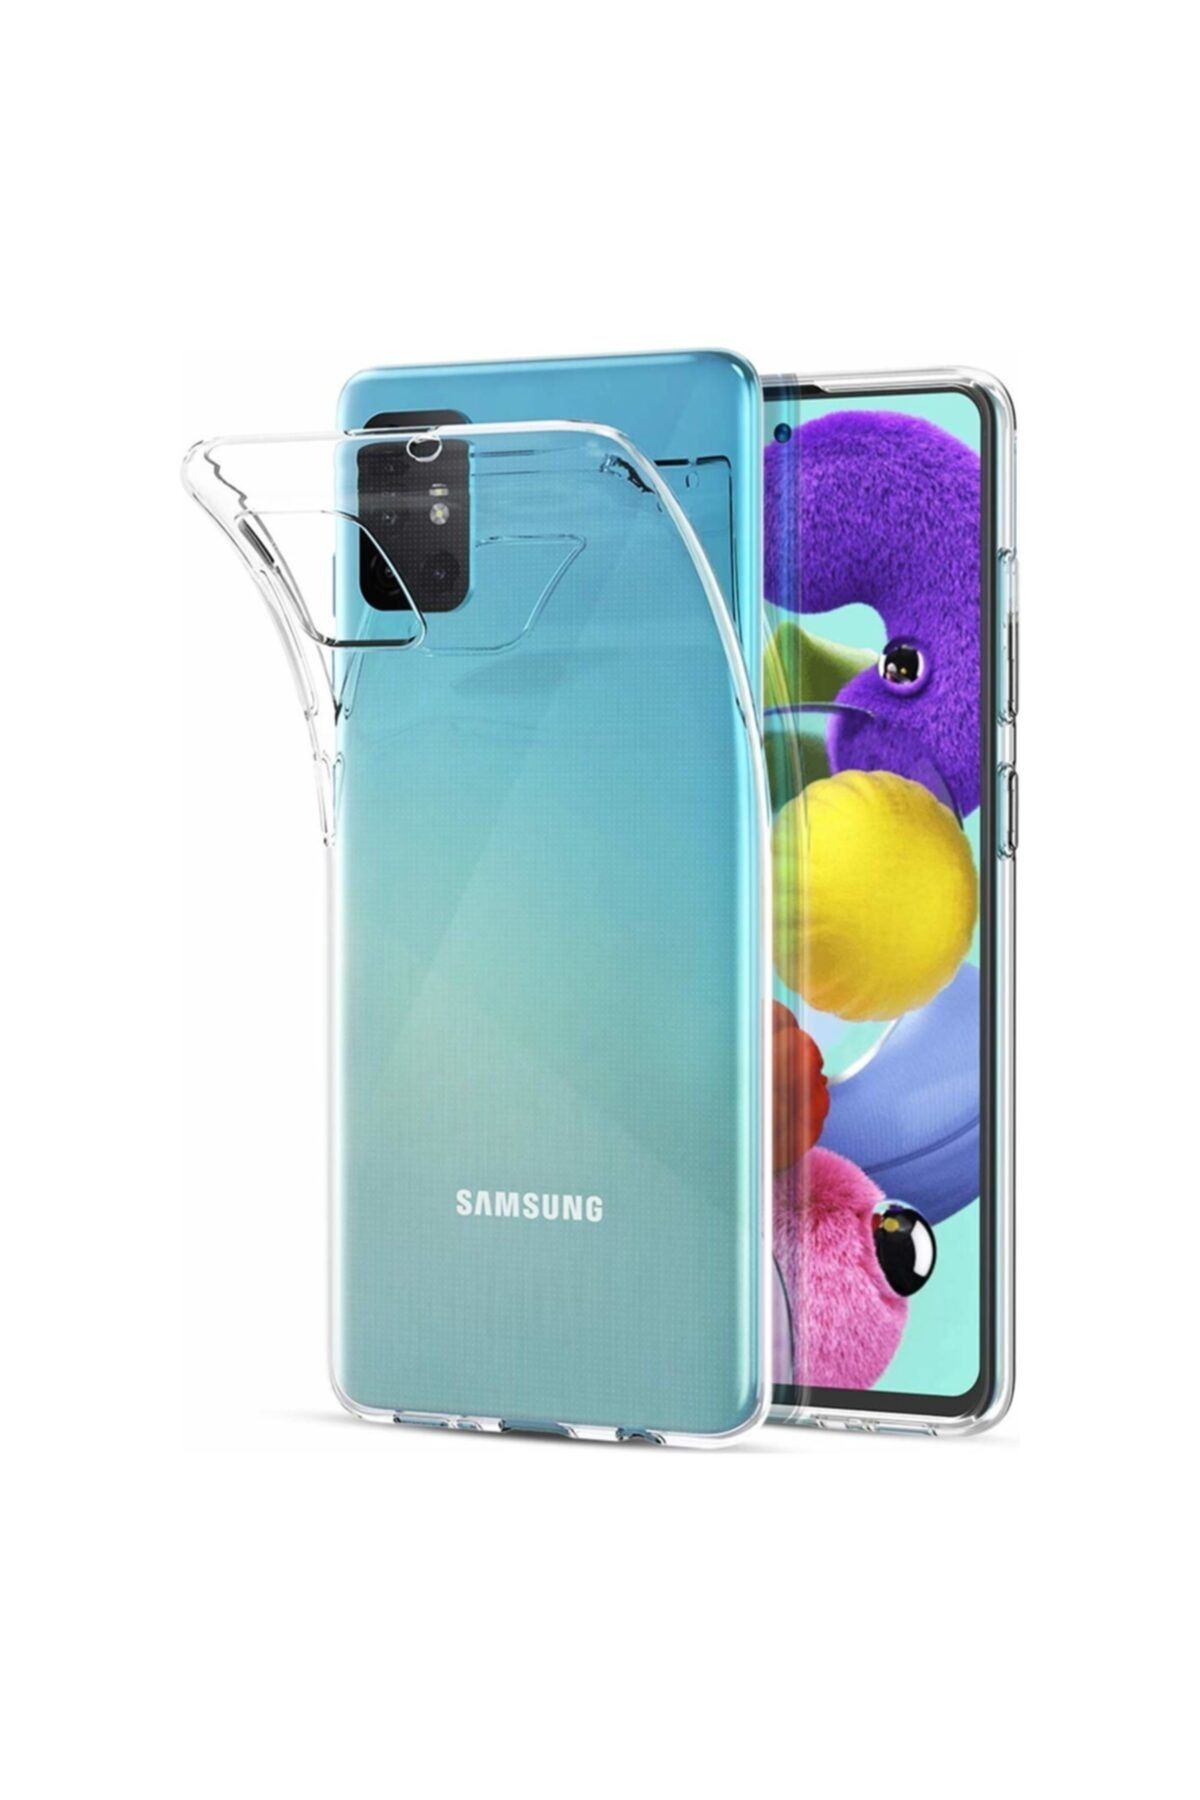 Fibaks Samsung Galaxy A51 Kılıf Ekran Koruyucu Şeffaf Lüx Süper Yumuşak Ince Slim Silikon